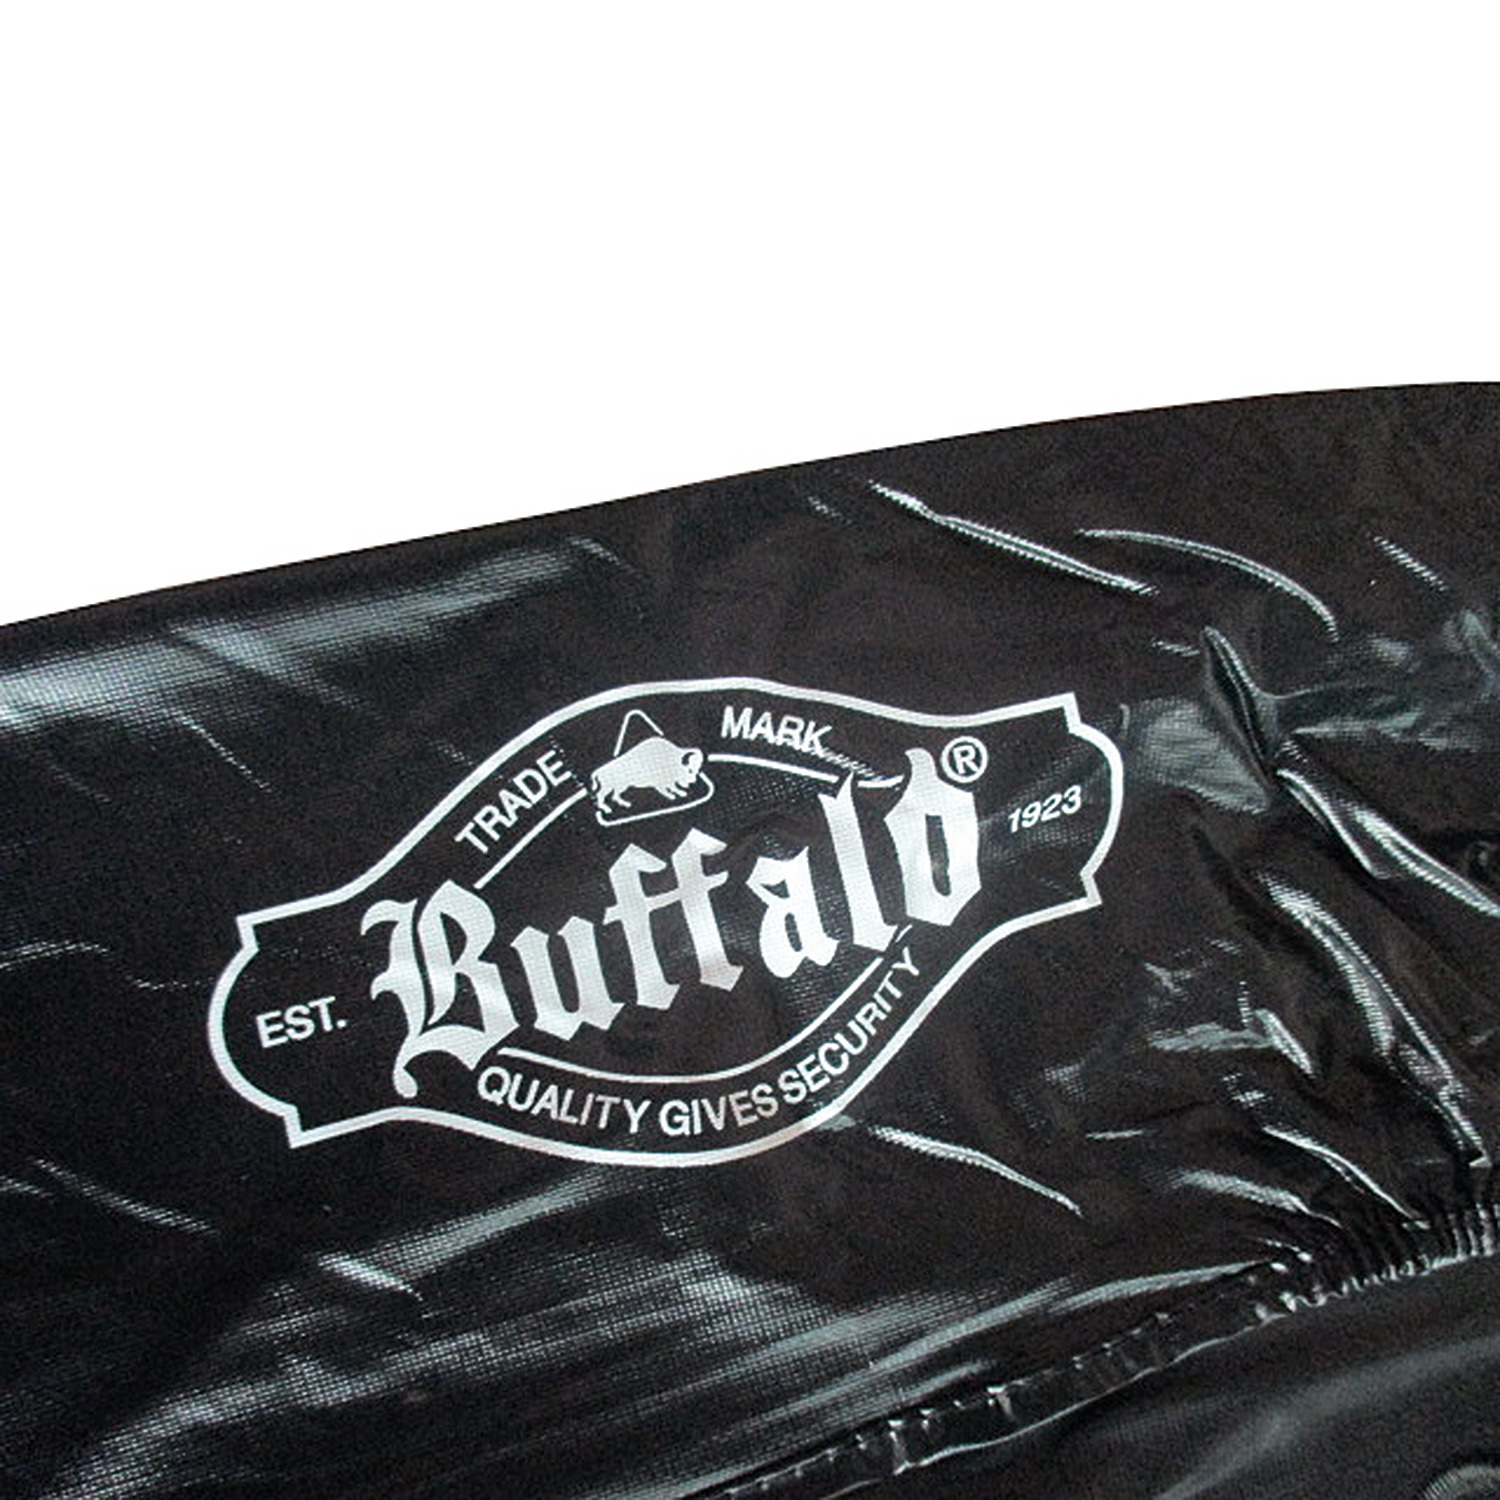 Buffalo afdekzeil biljarttafel 260 zwart